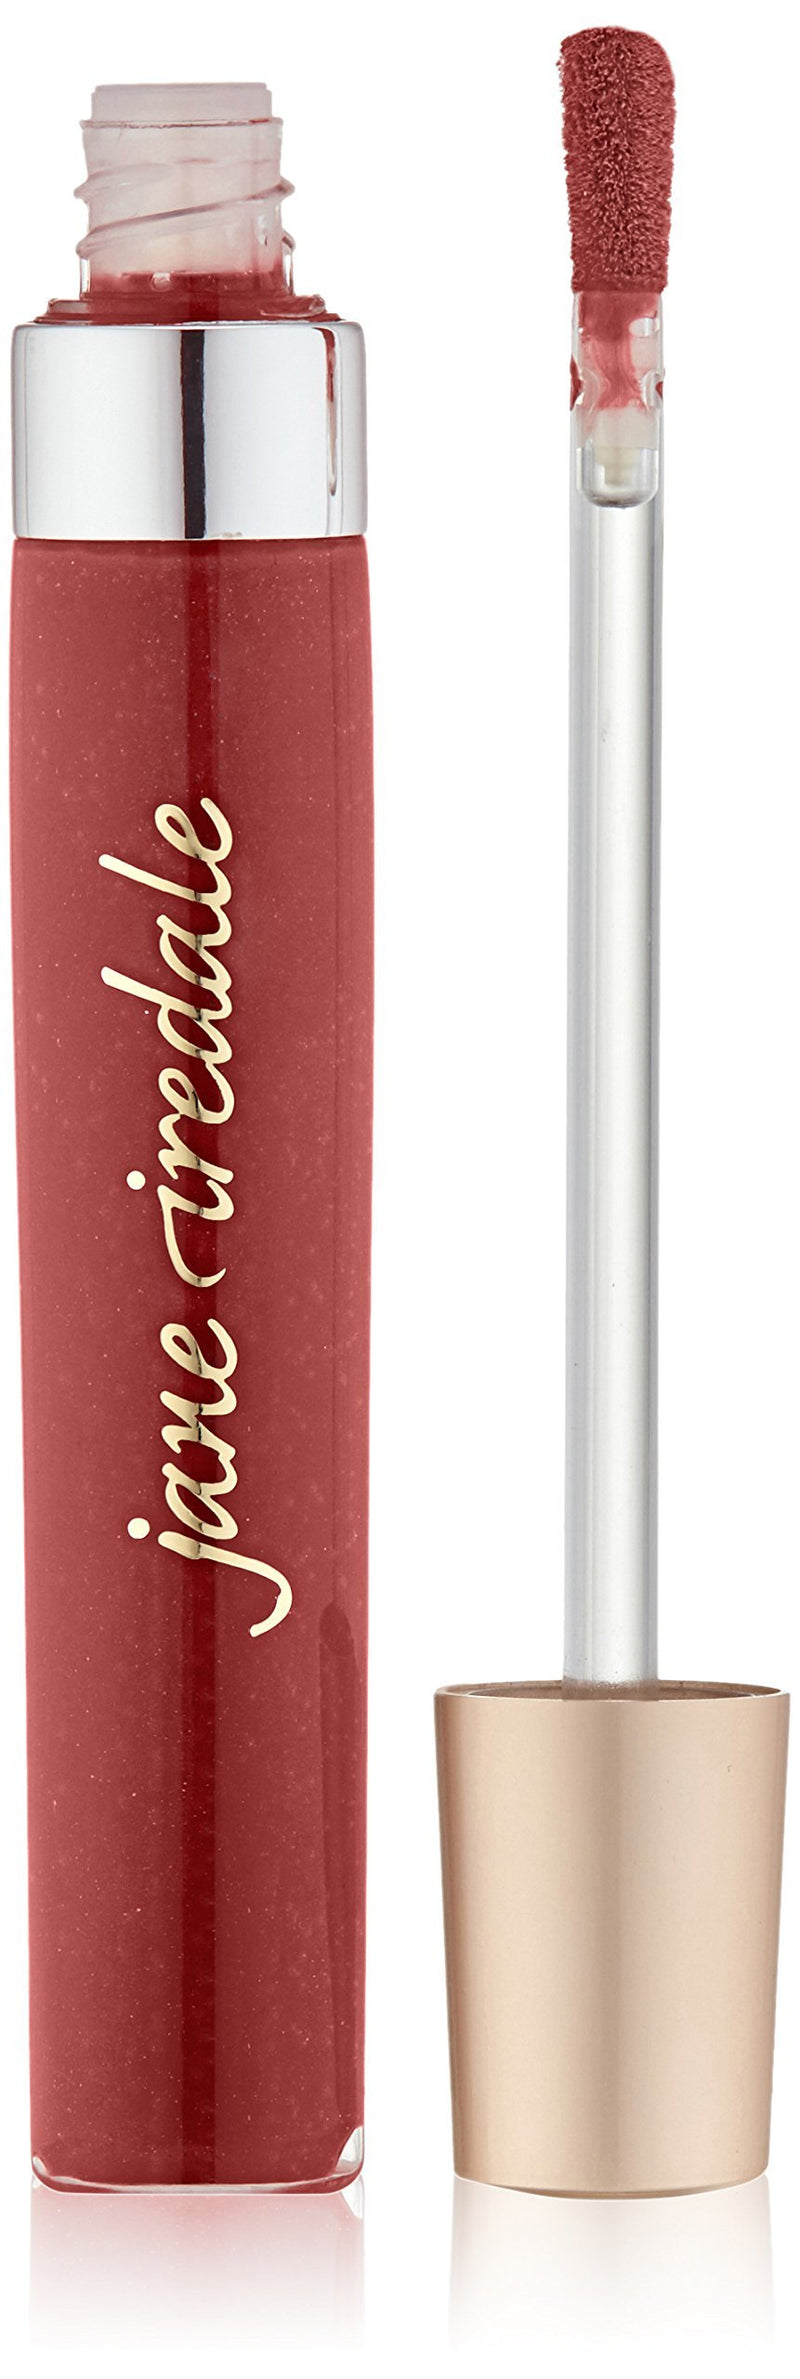 Jane Iredale PureGloss Lip Gloss - Crabapple 0.23 oz Lip Gloss